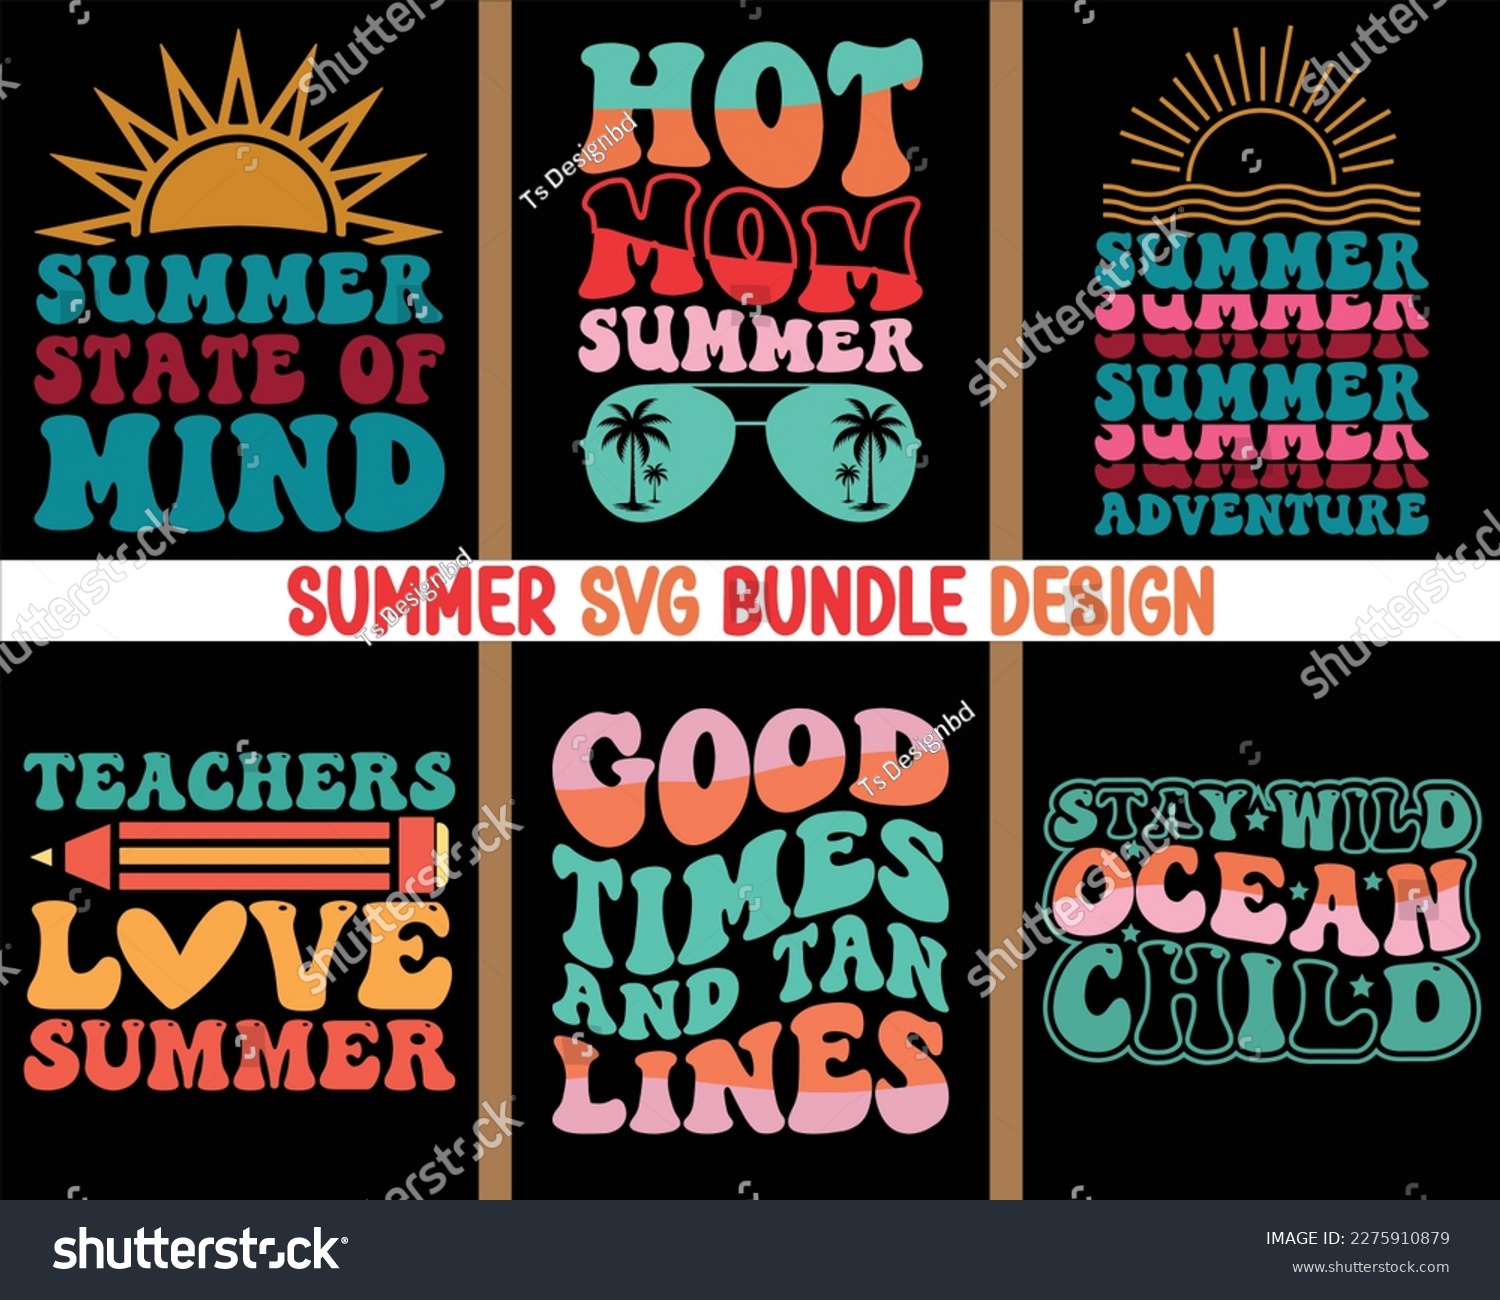 SVG of summer SVG design bundle,Summer Beach Bundle SVG,Summer Quotes SVG Designs Bundle,Summer Design for Shirts,Hello Summer quotes t shirt designs bundle, Quotes about Summer svg